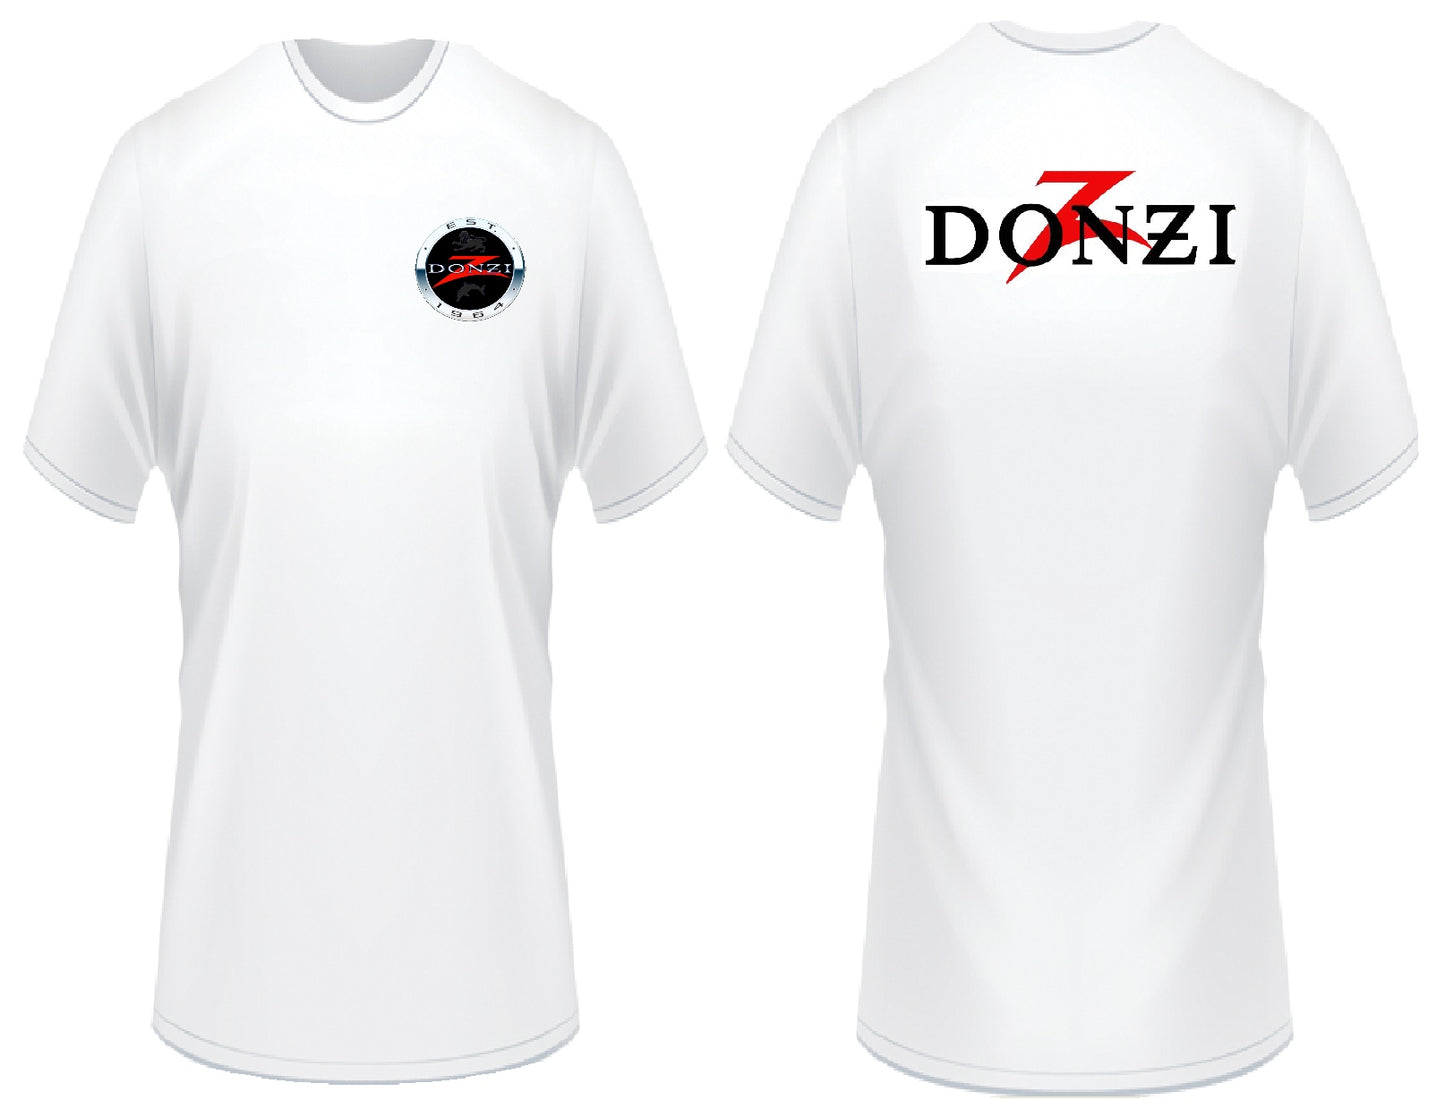 Donzi Boats T-Shirt